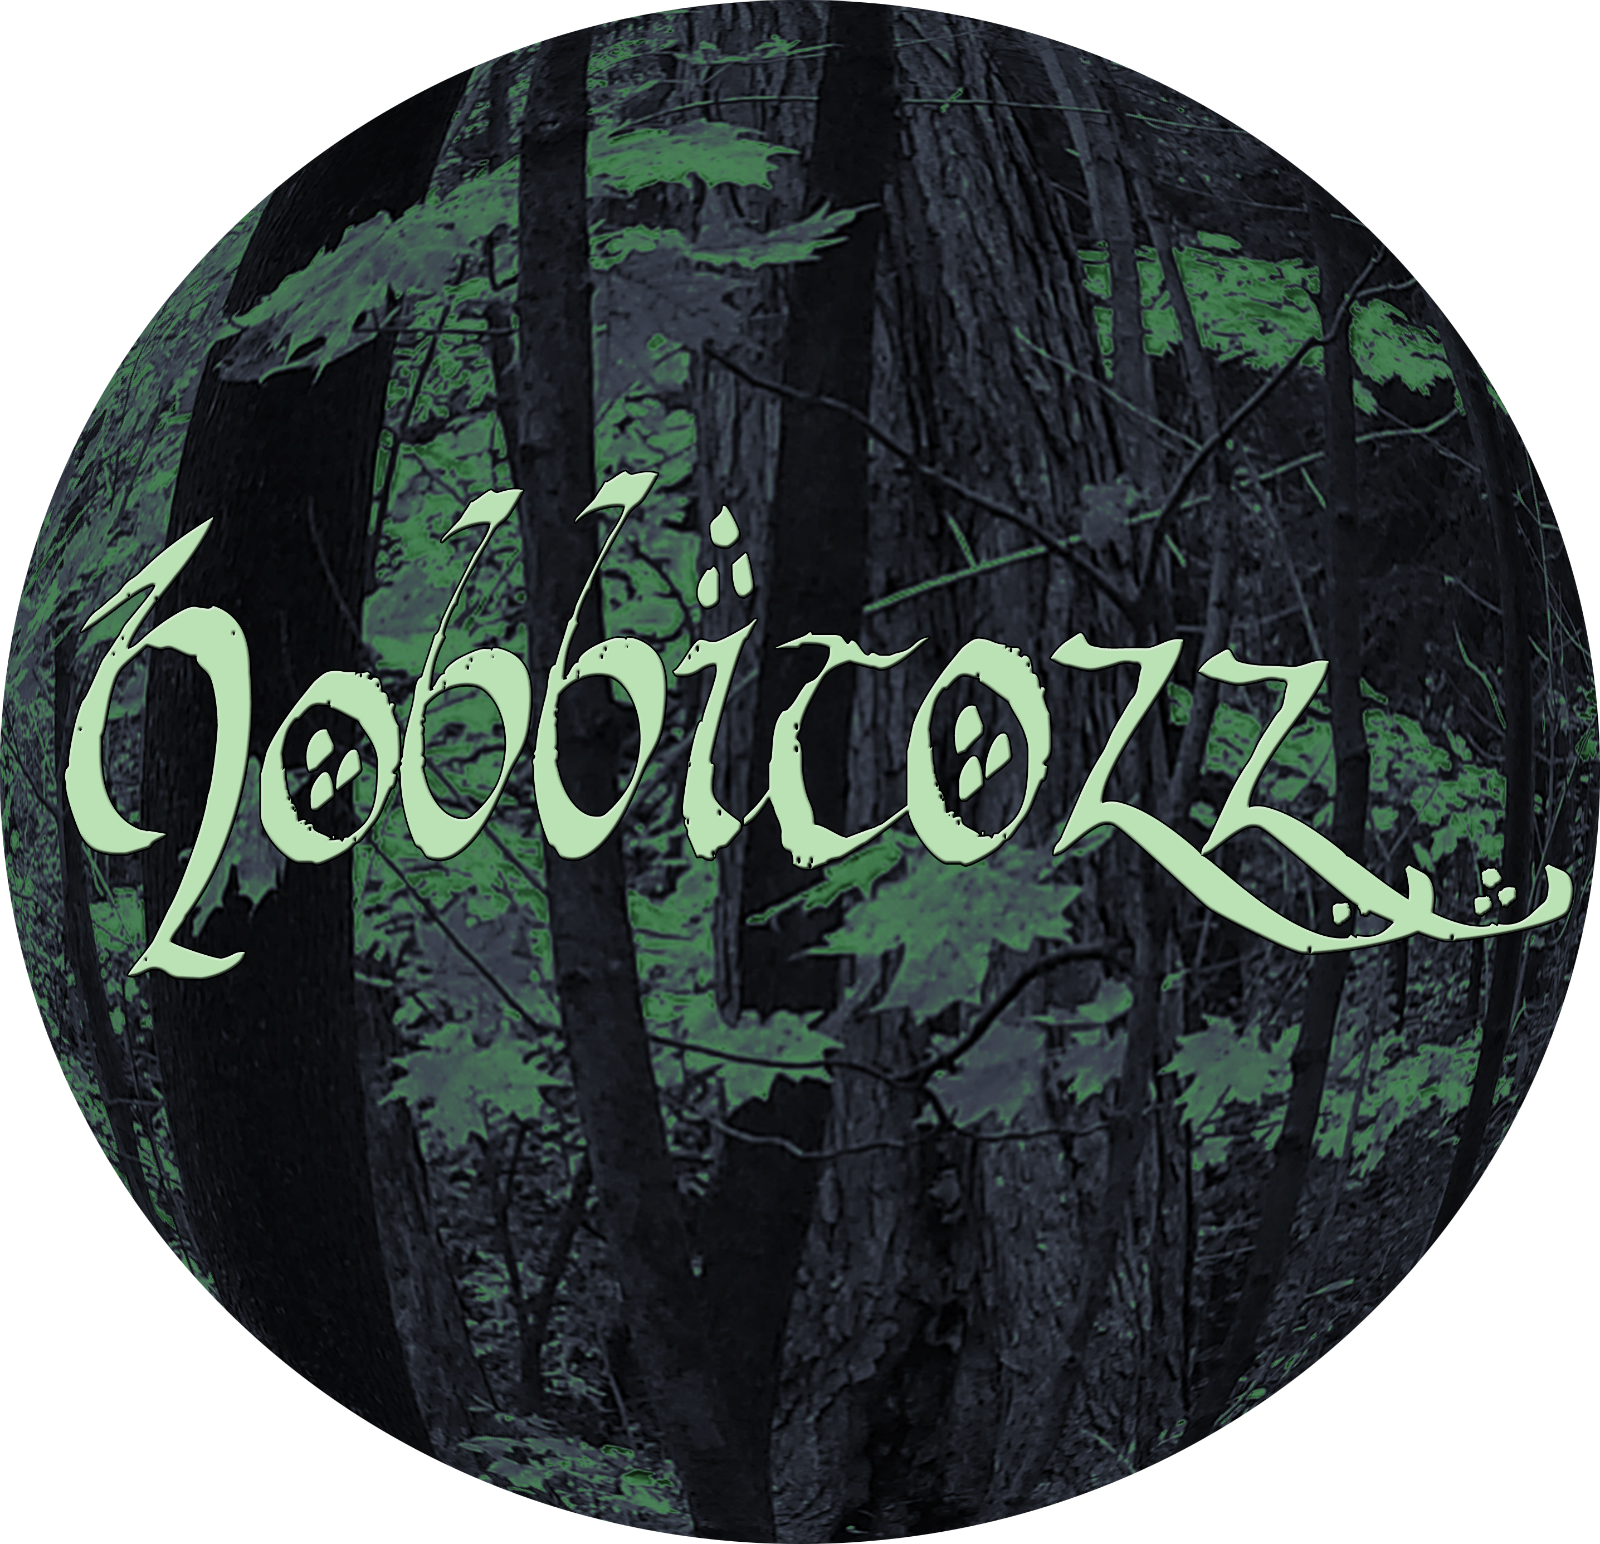 the planet of Hobbitozz